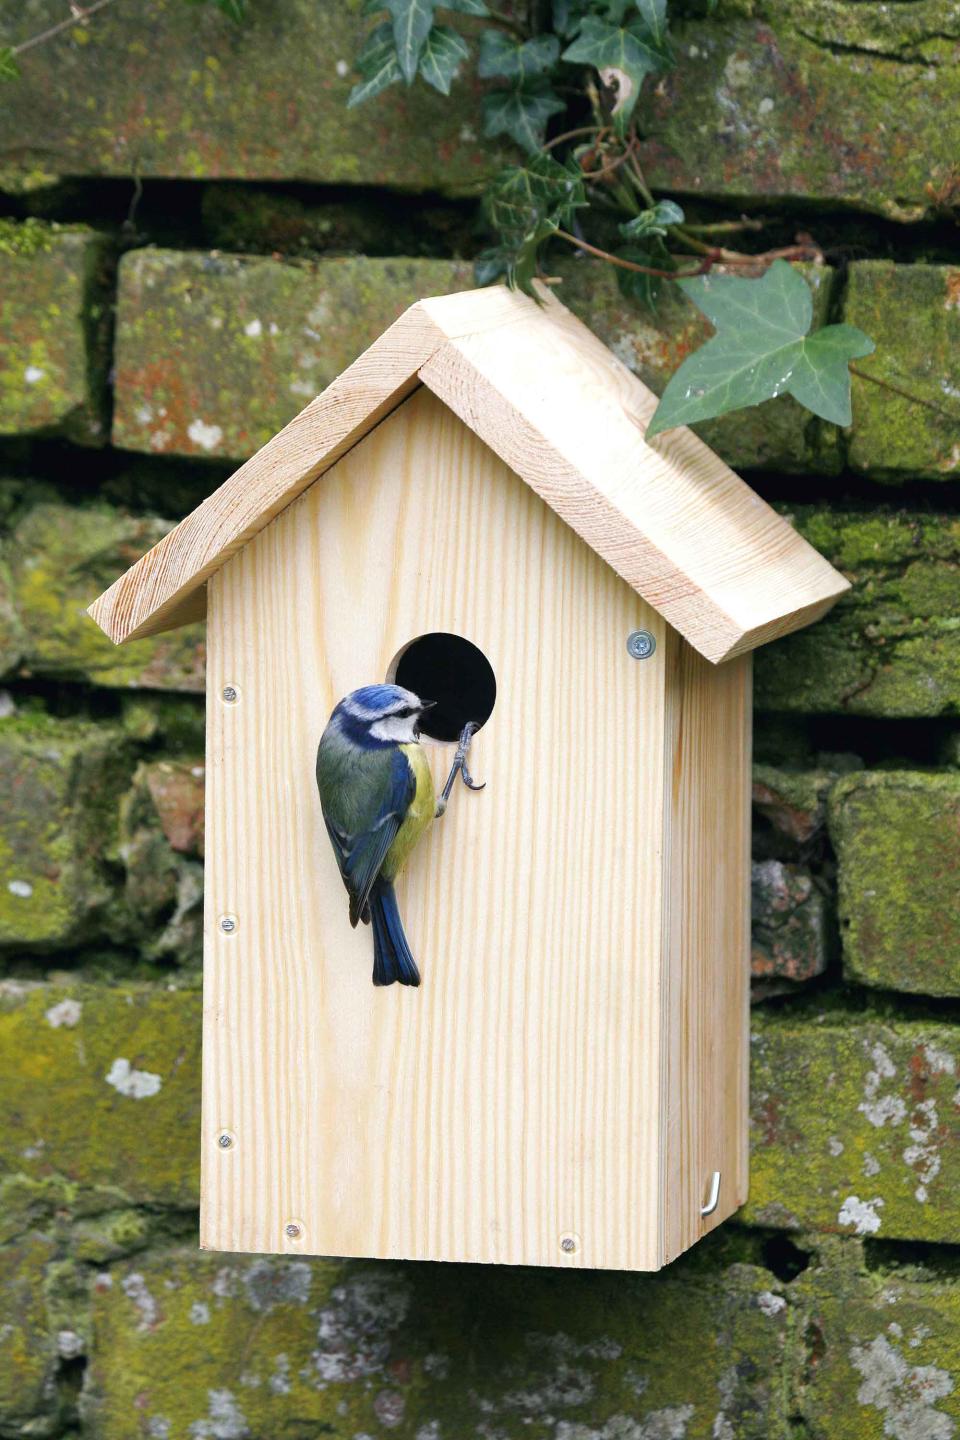 5. BUILD YOUR OWN BIRD HOUSE